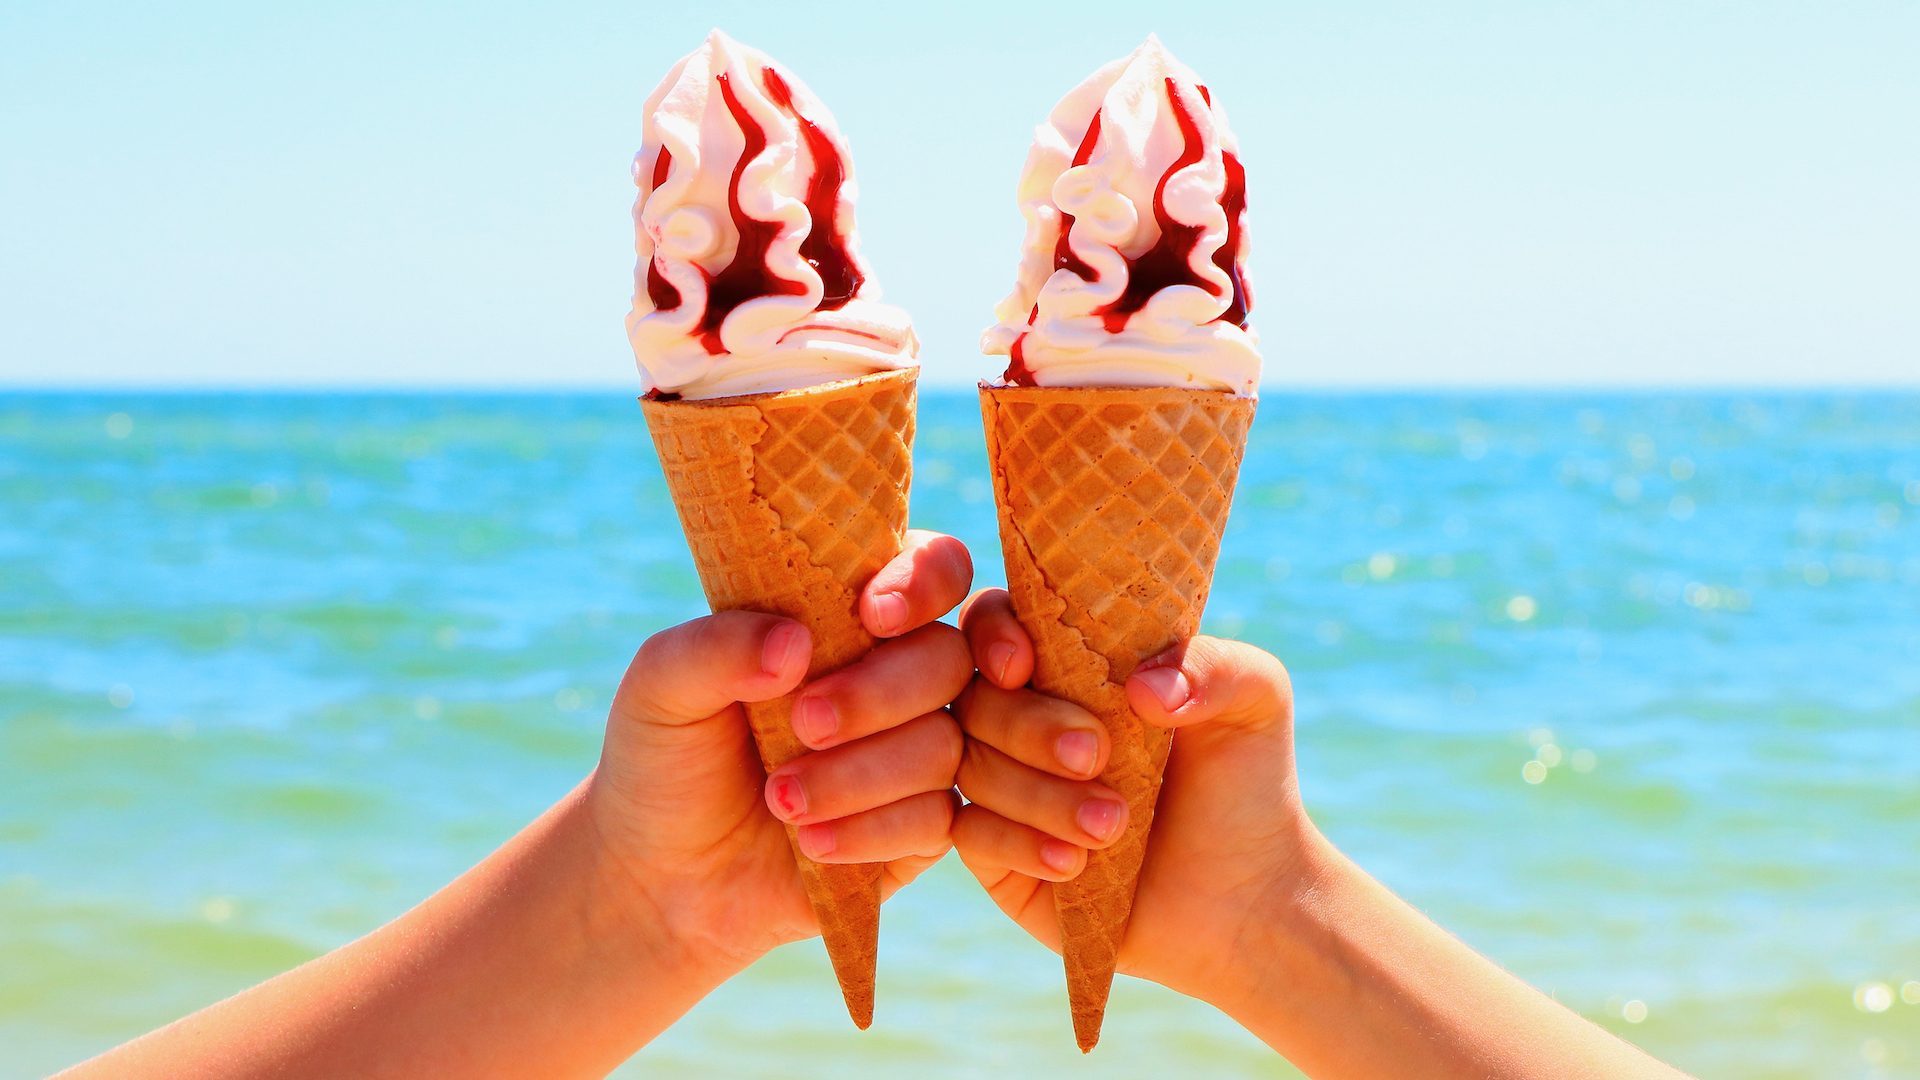 Two ice creams